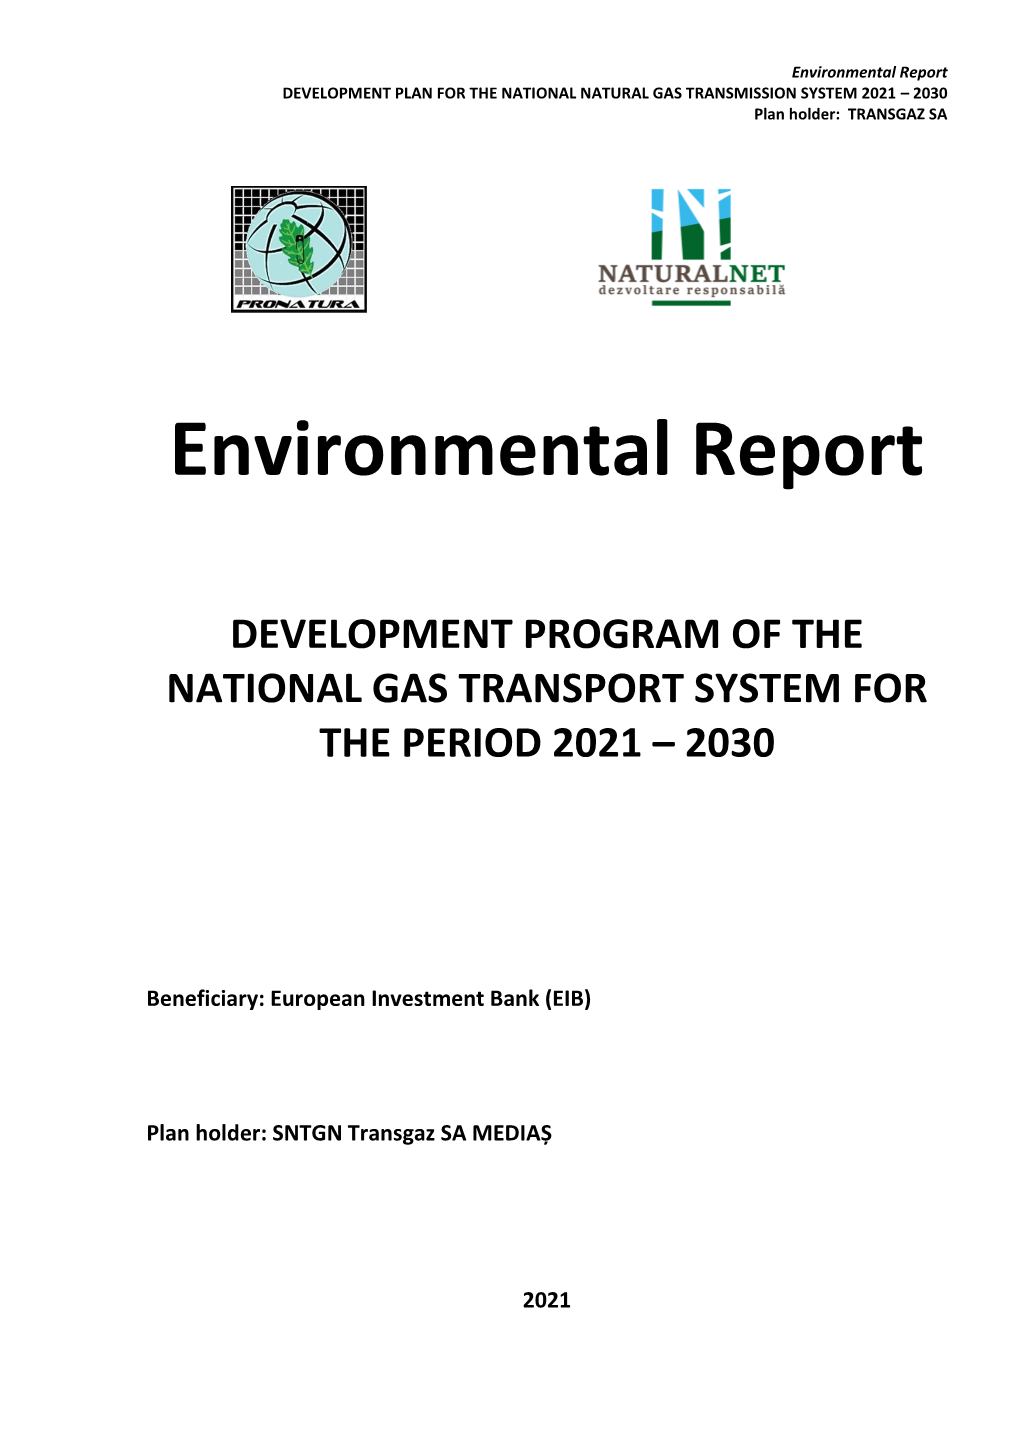 Environmental Report DEVELOPMENT PLAN for the NATIONAL NATURAL GAS TRANSMISSION SYSTEM 2021 – 2030 Plan Holder: TRANSGAZ SA